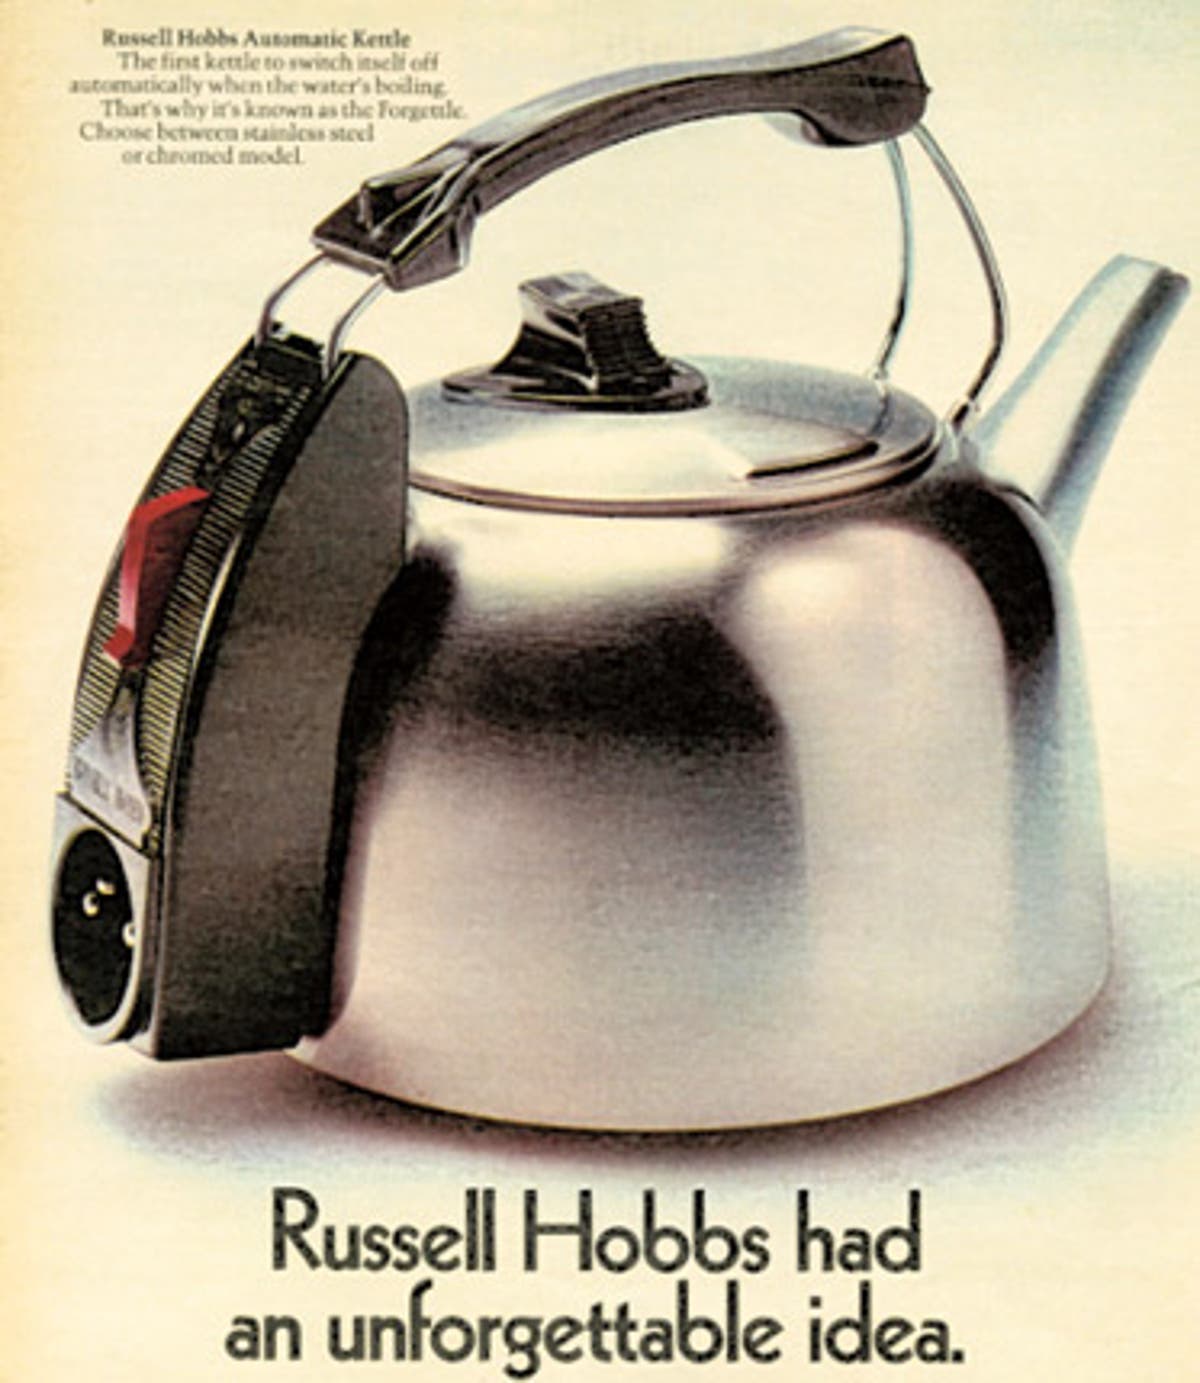  Russell Hobbs: TEA KETTLES